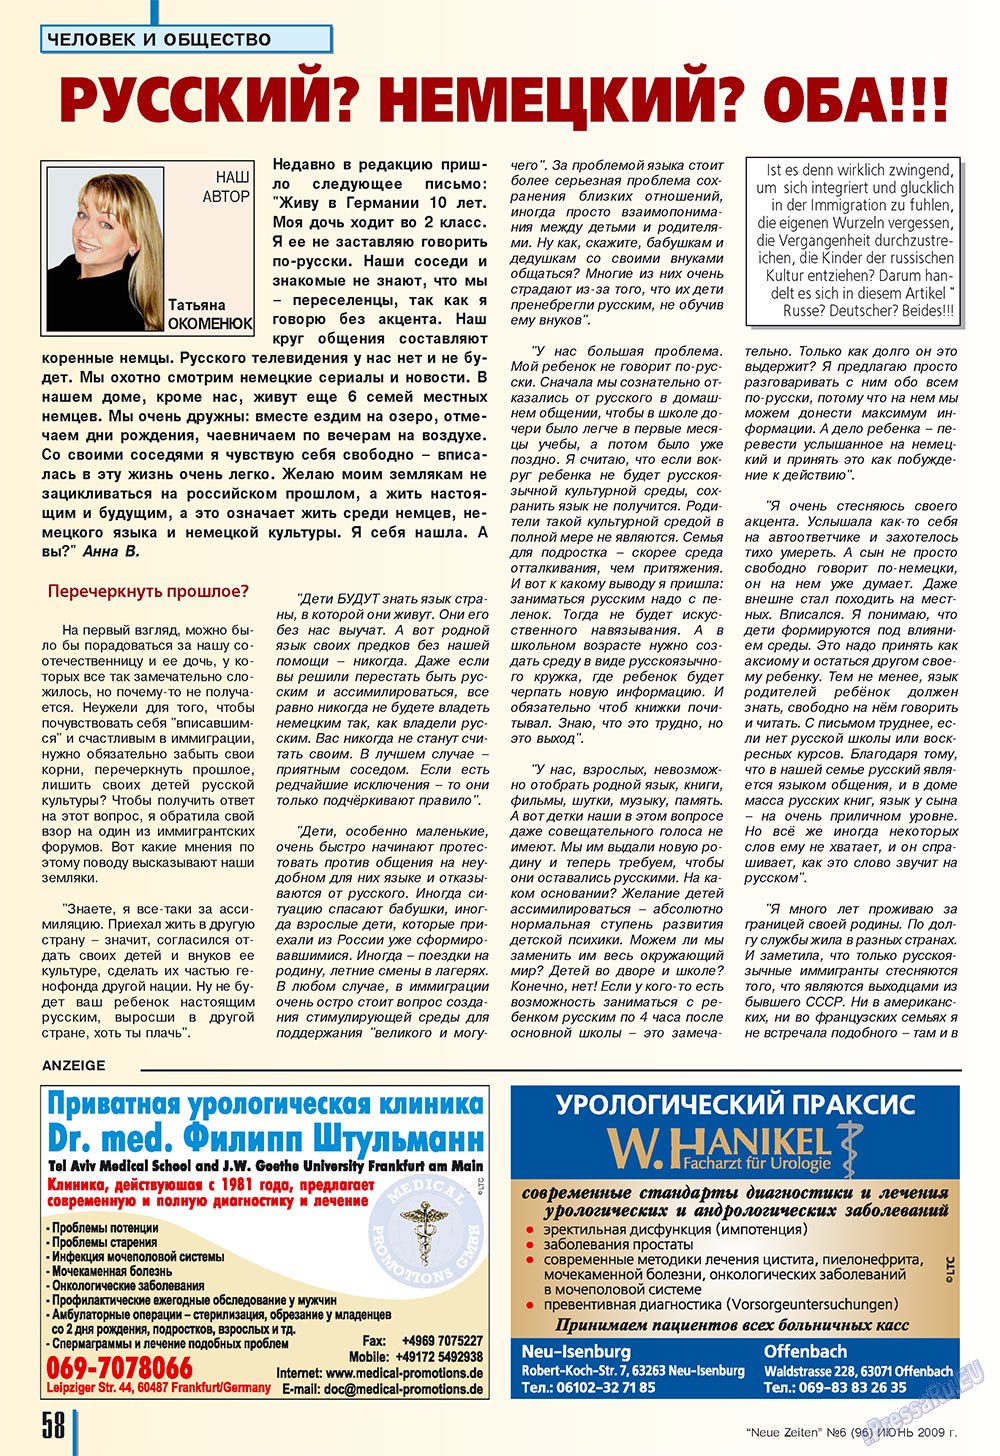 Neue Zeiten (журнал). 2009 год, номер 6, стр. 58